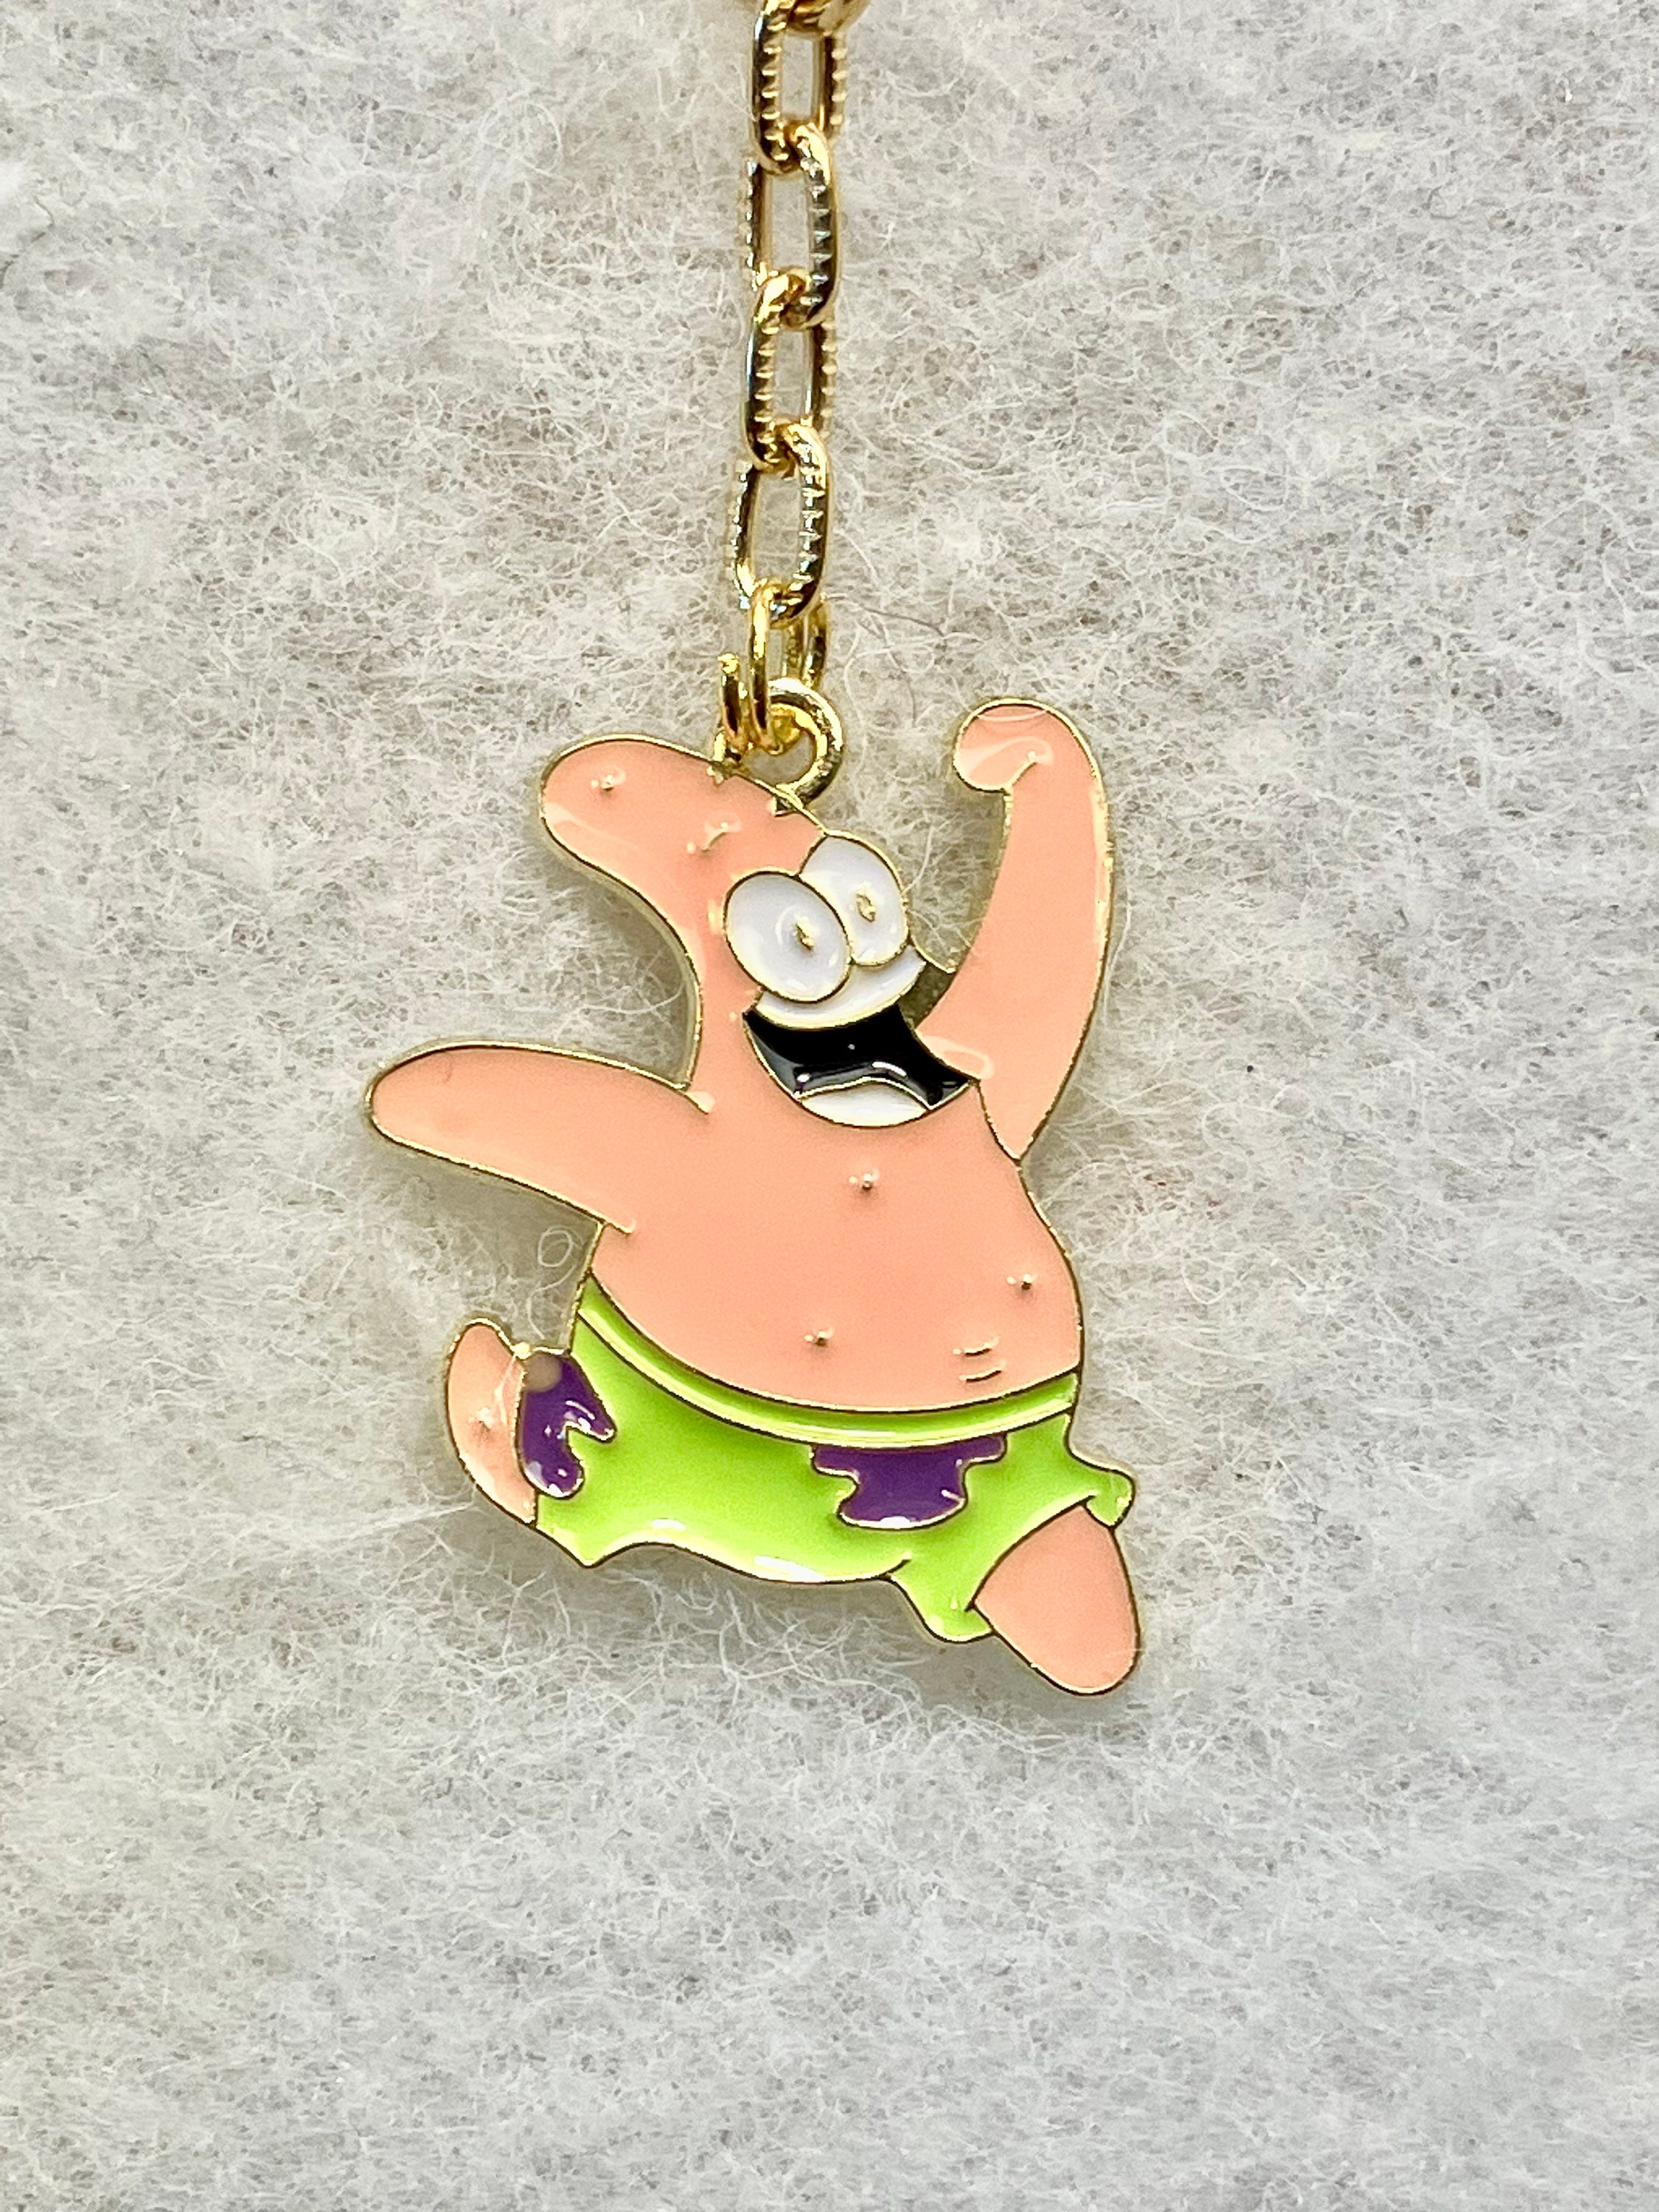 KeyringKrew Spongebob SquarePants Keyrings/Keychains | Cartoon Cute Emo Kids Goth Fun Jake Finn Japan Kitsch 90s